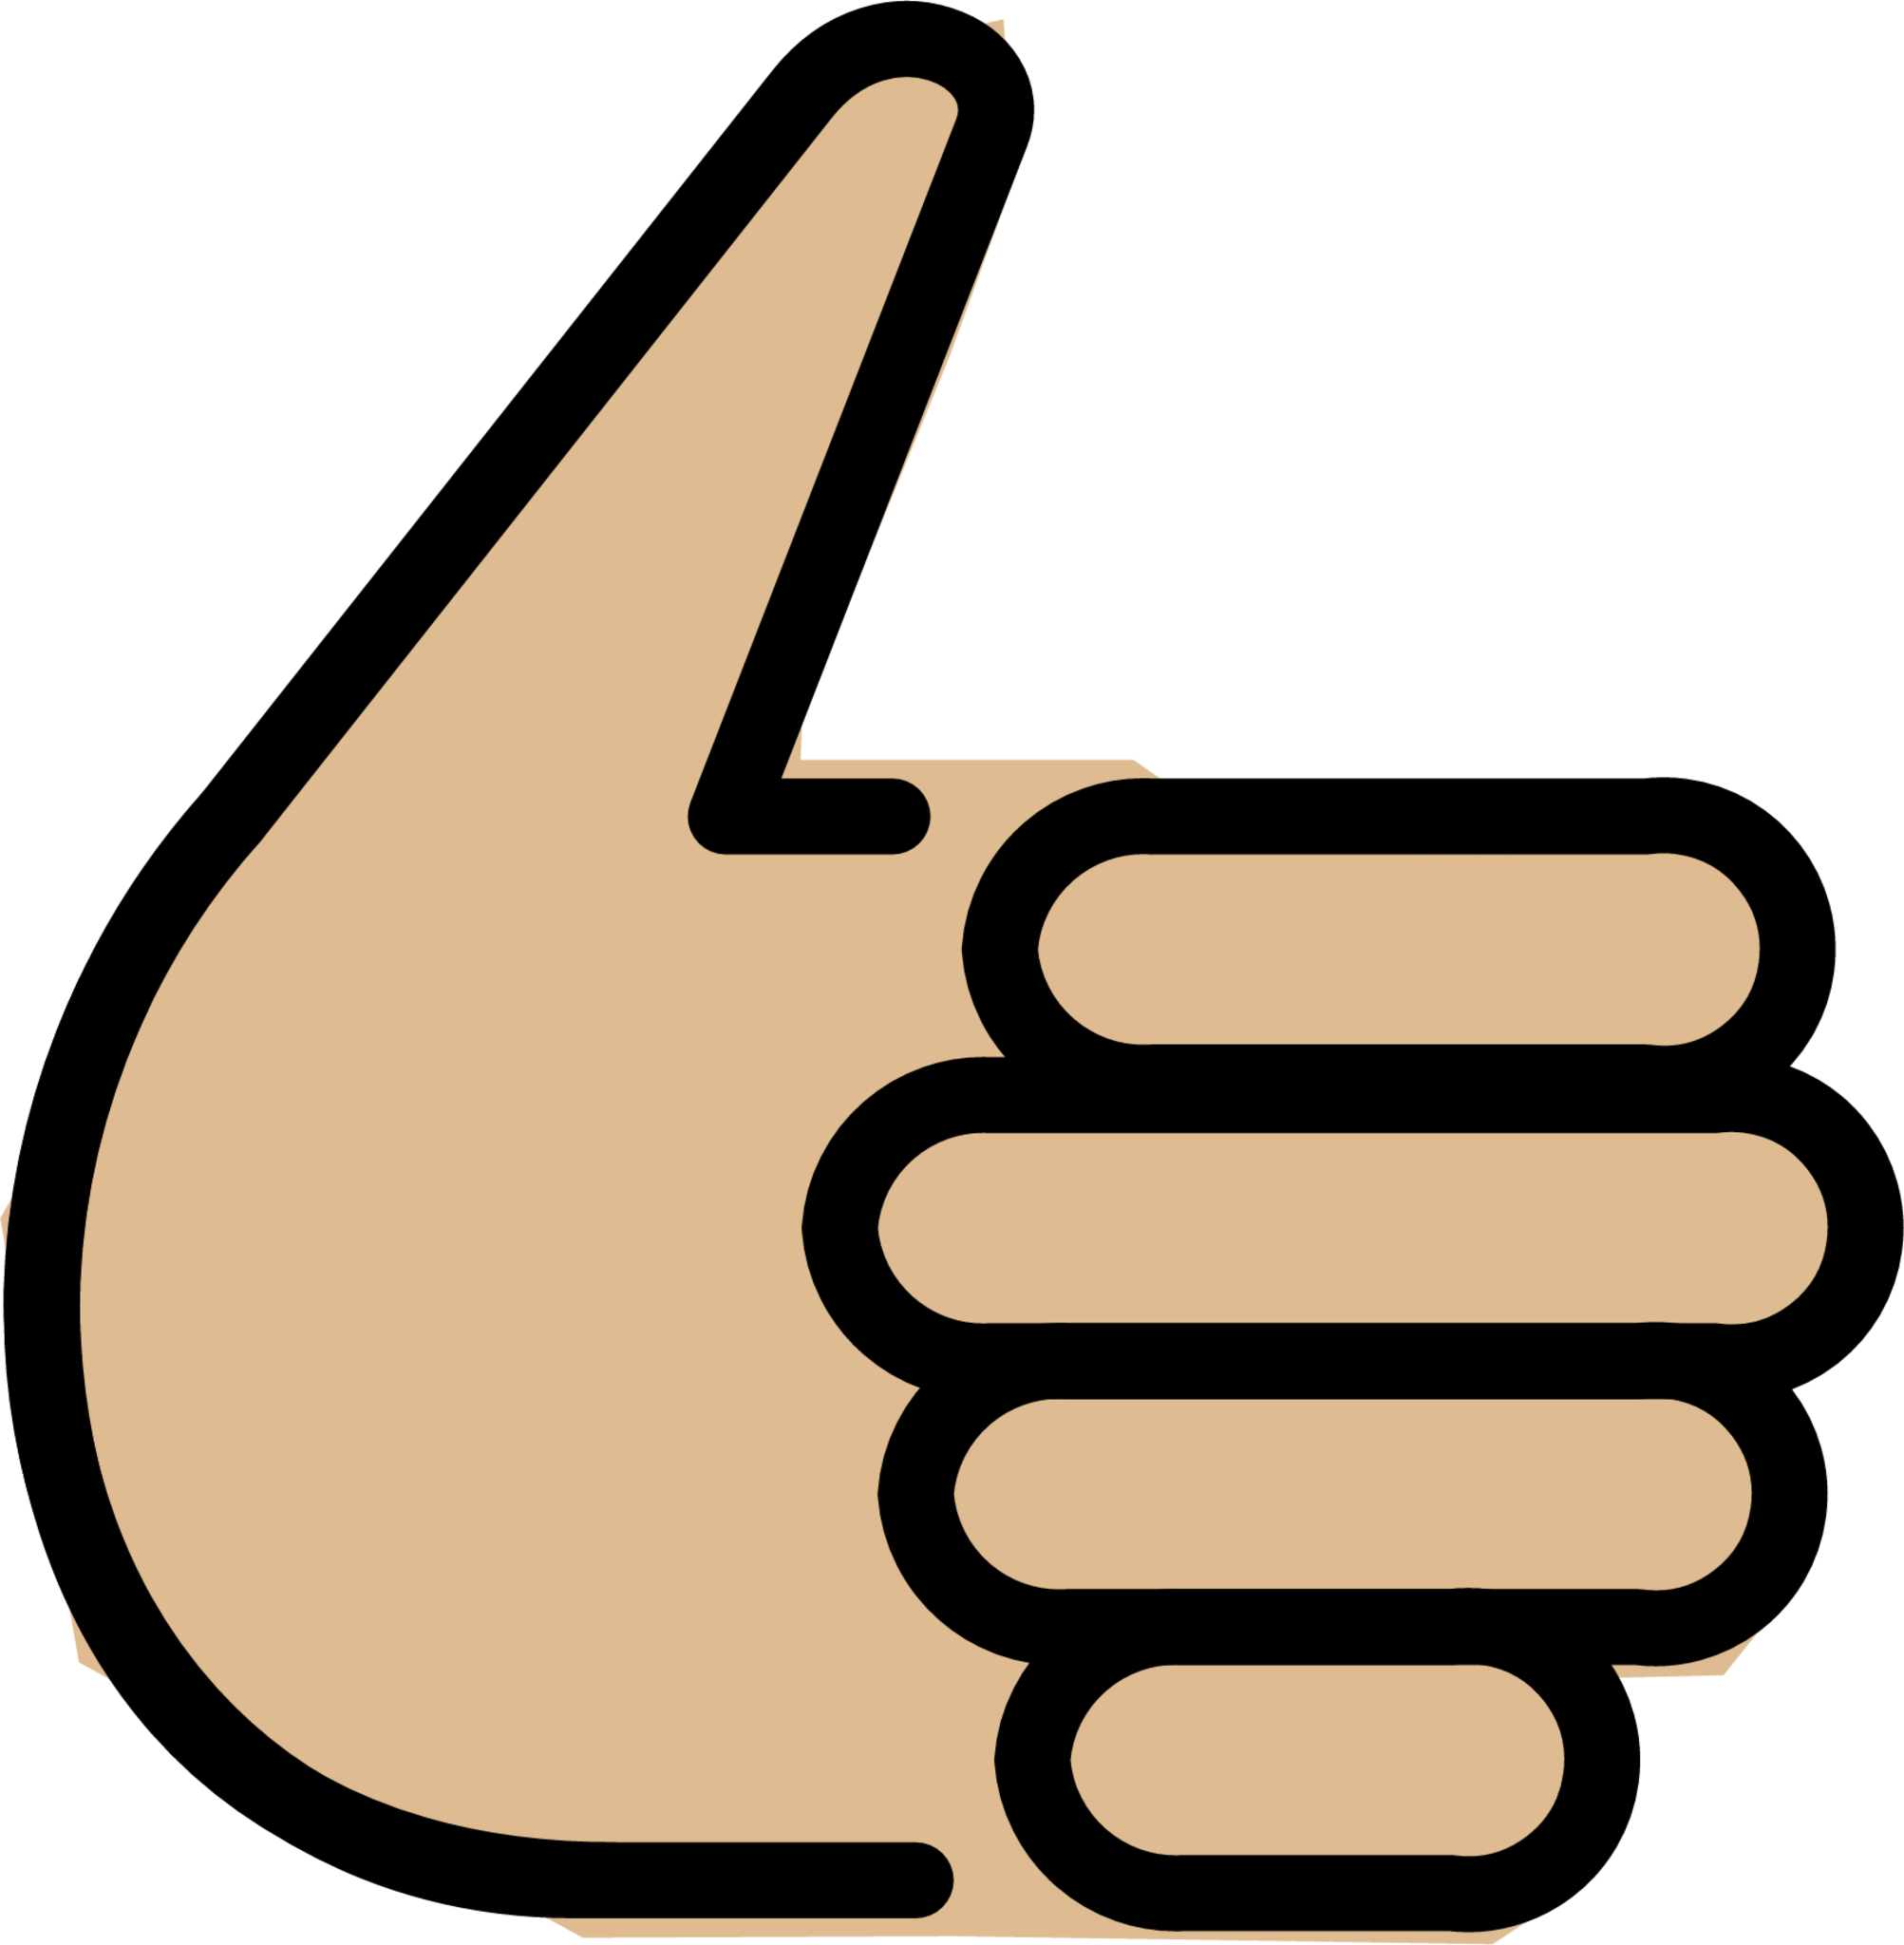 thumbs up: medium-light skin tone emoji